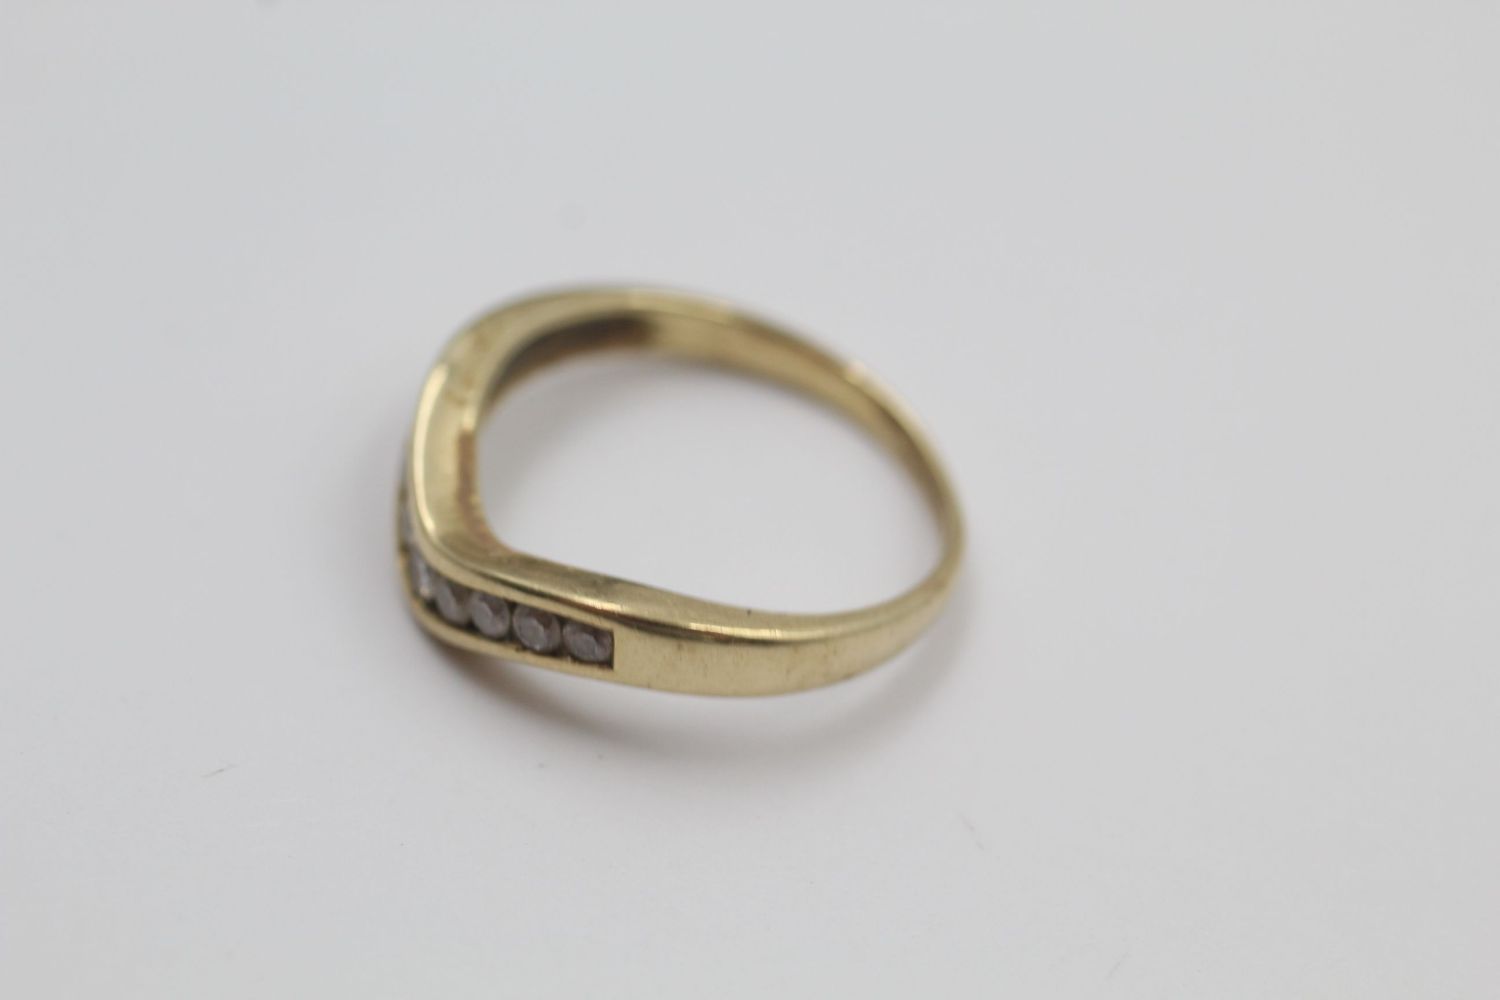 9ct gold caliber cut gemstone chevron ring 1.8 grams gross - Image 2 of 4